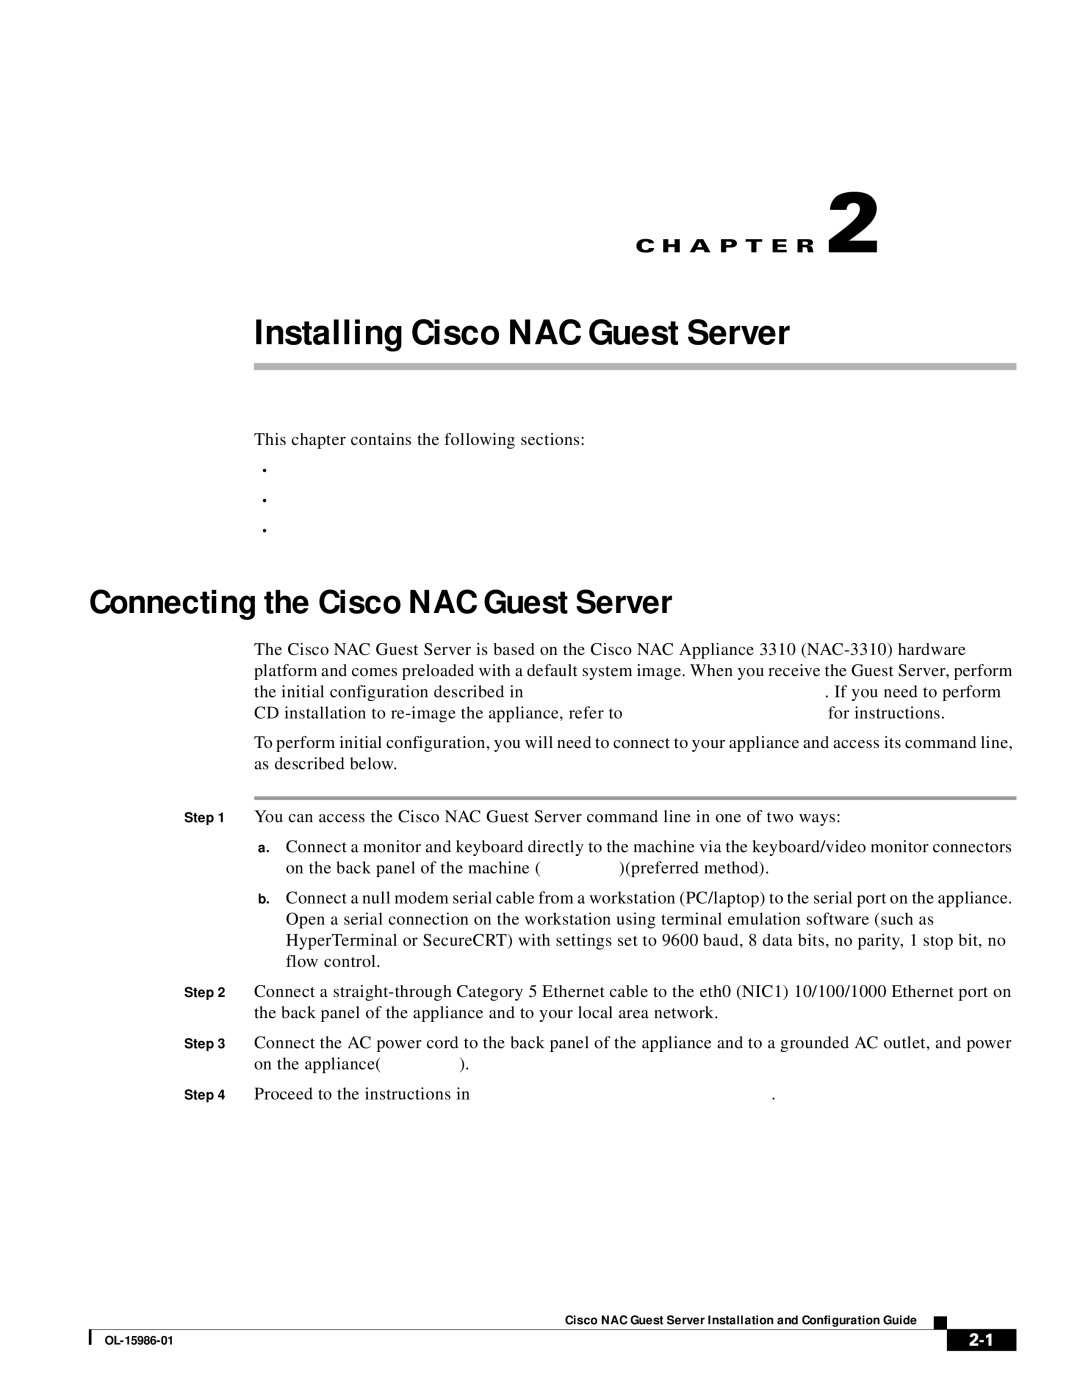 Cisco Systems OL-15986-01 manual Installing Cisco NAC Guest Server, Connecting the Cisco NAC Guest Server 